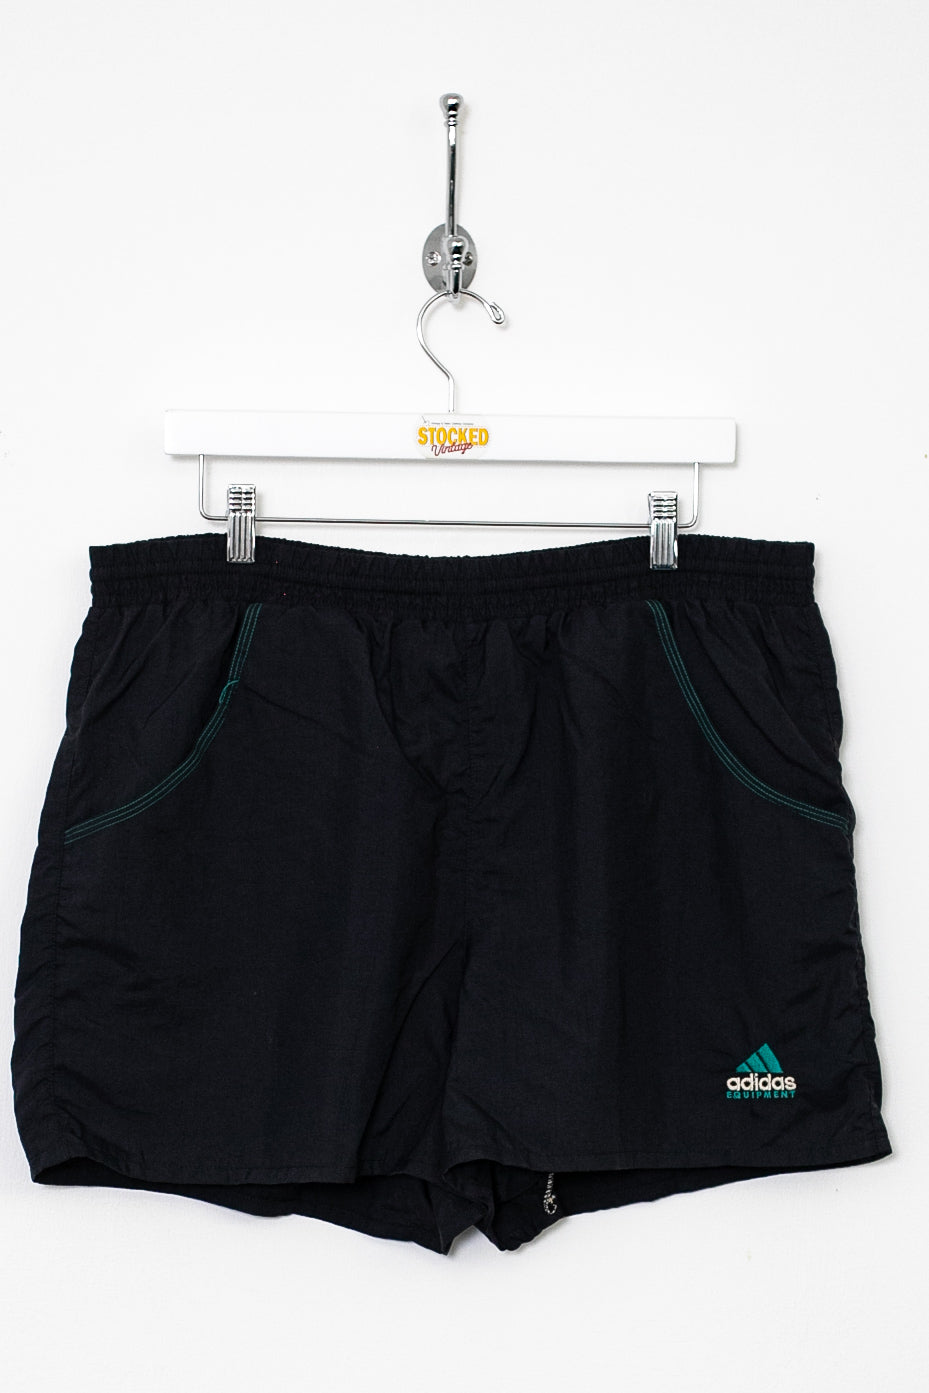 90s Adidas Equipment Shorts (L)